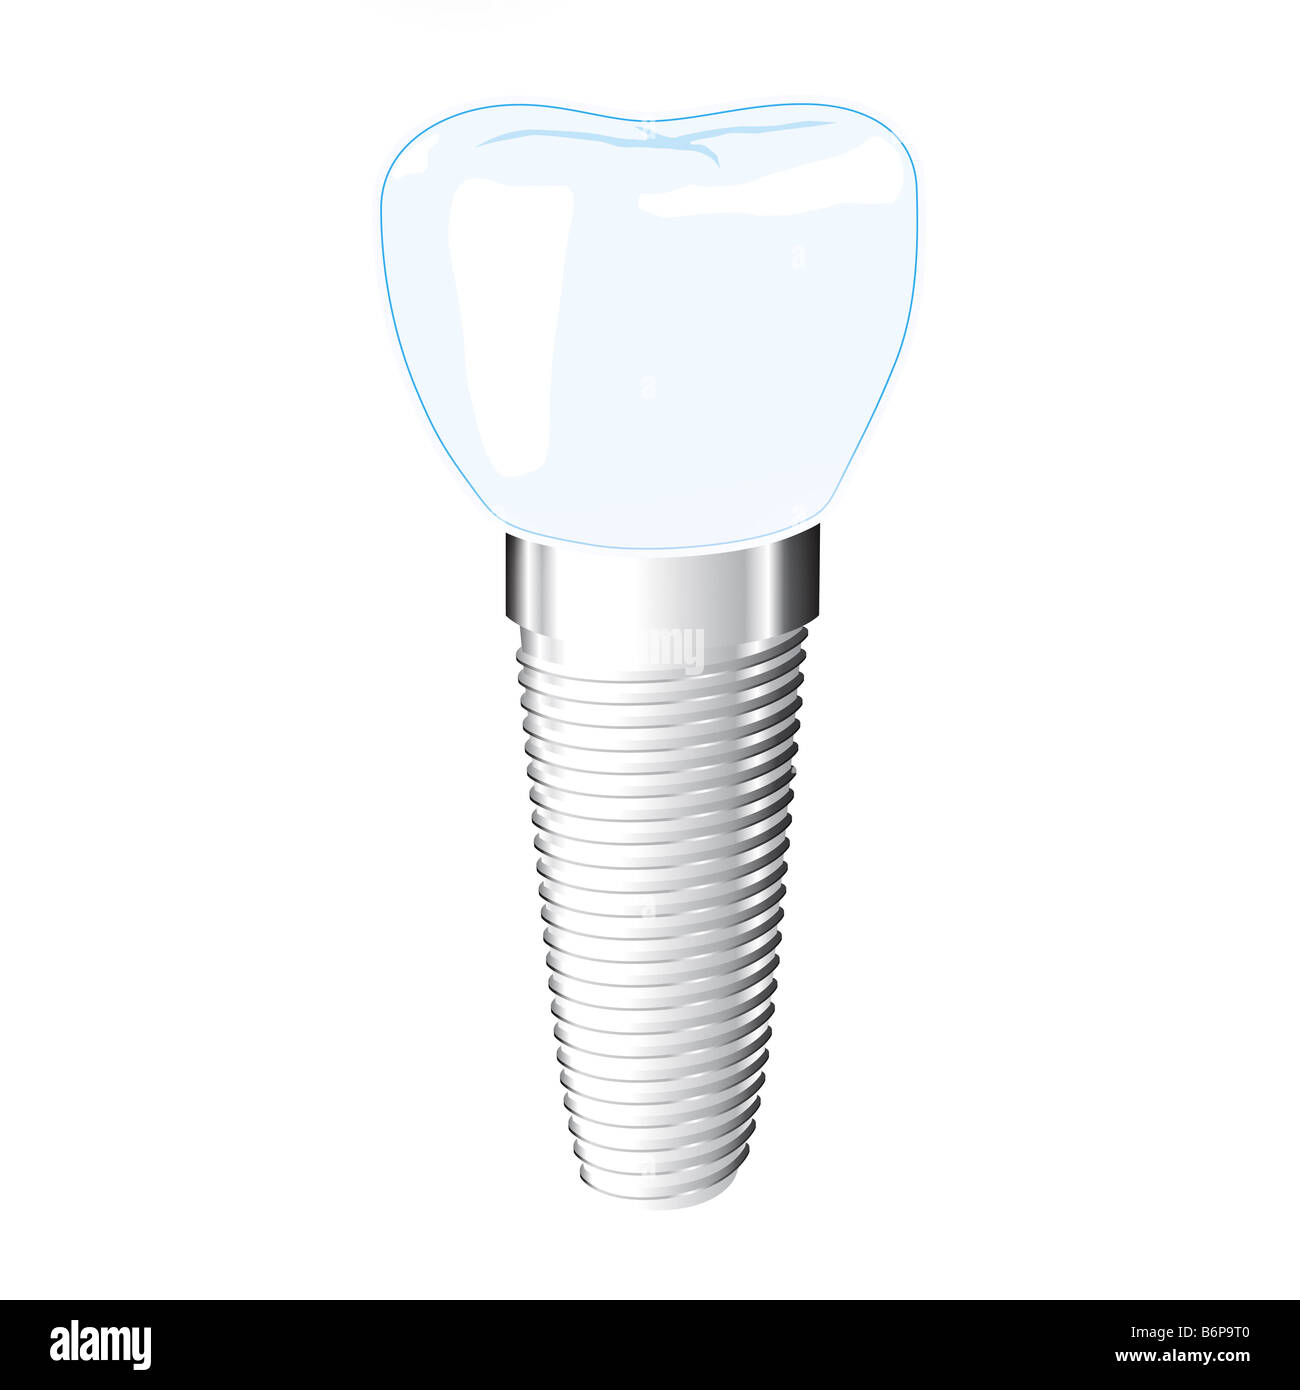 Dental implant Stock Photo